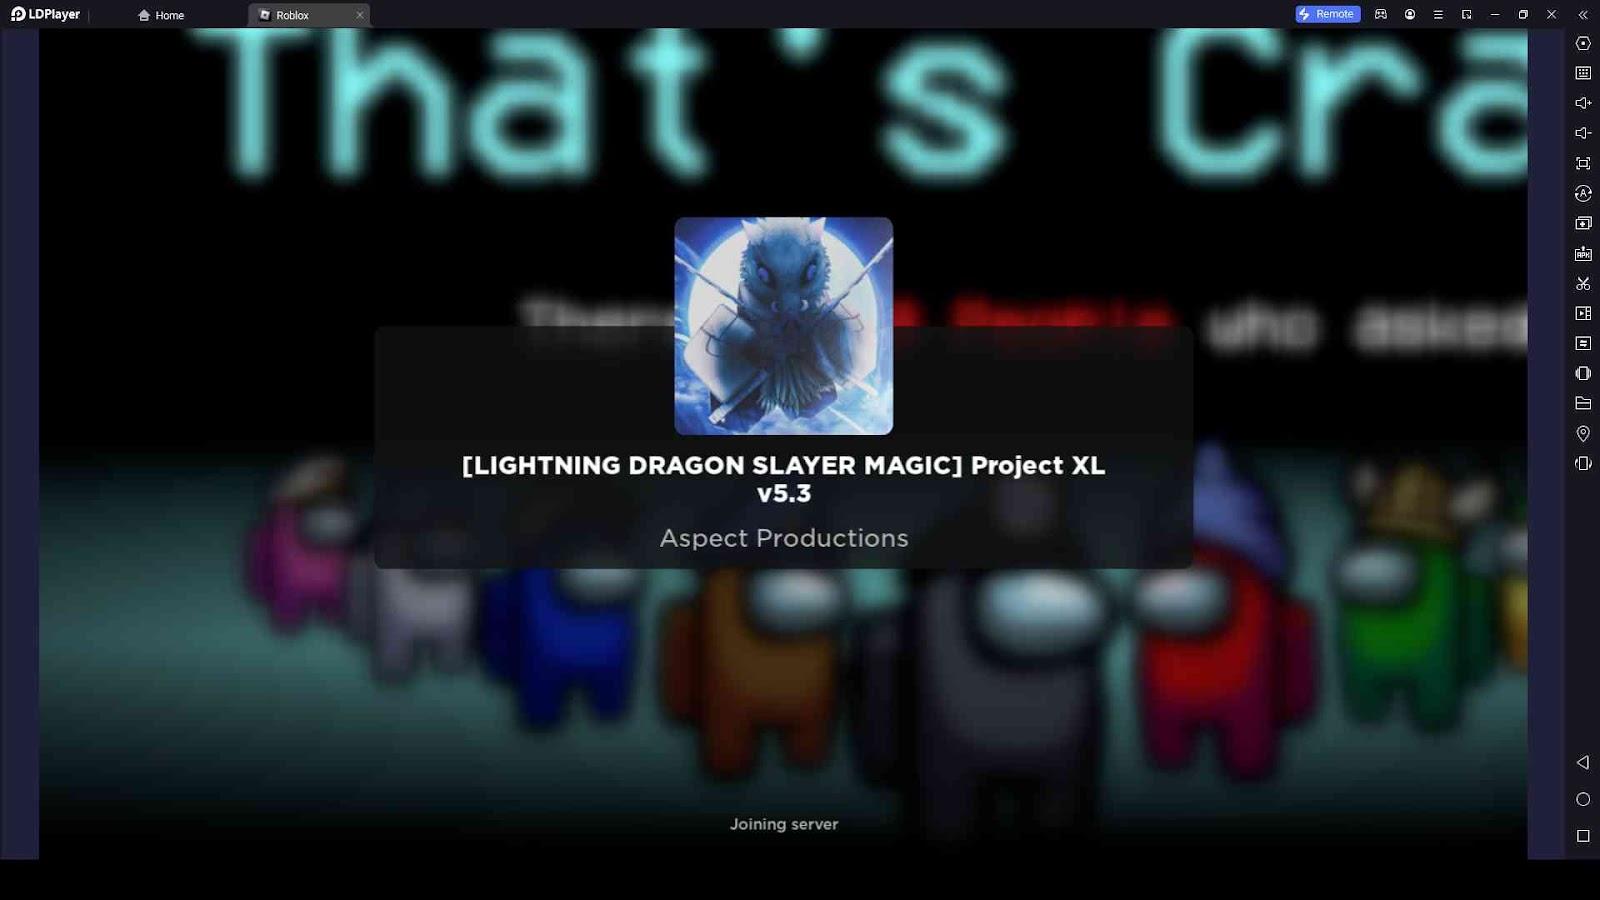 New Legendary Ability Lightning Dragon Slayer Magic + Giveaway!